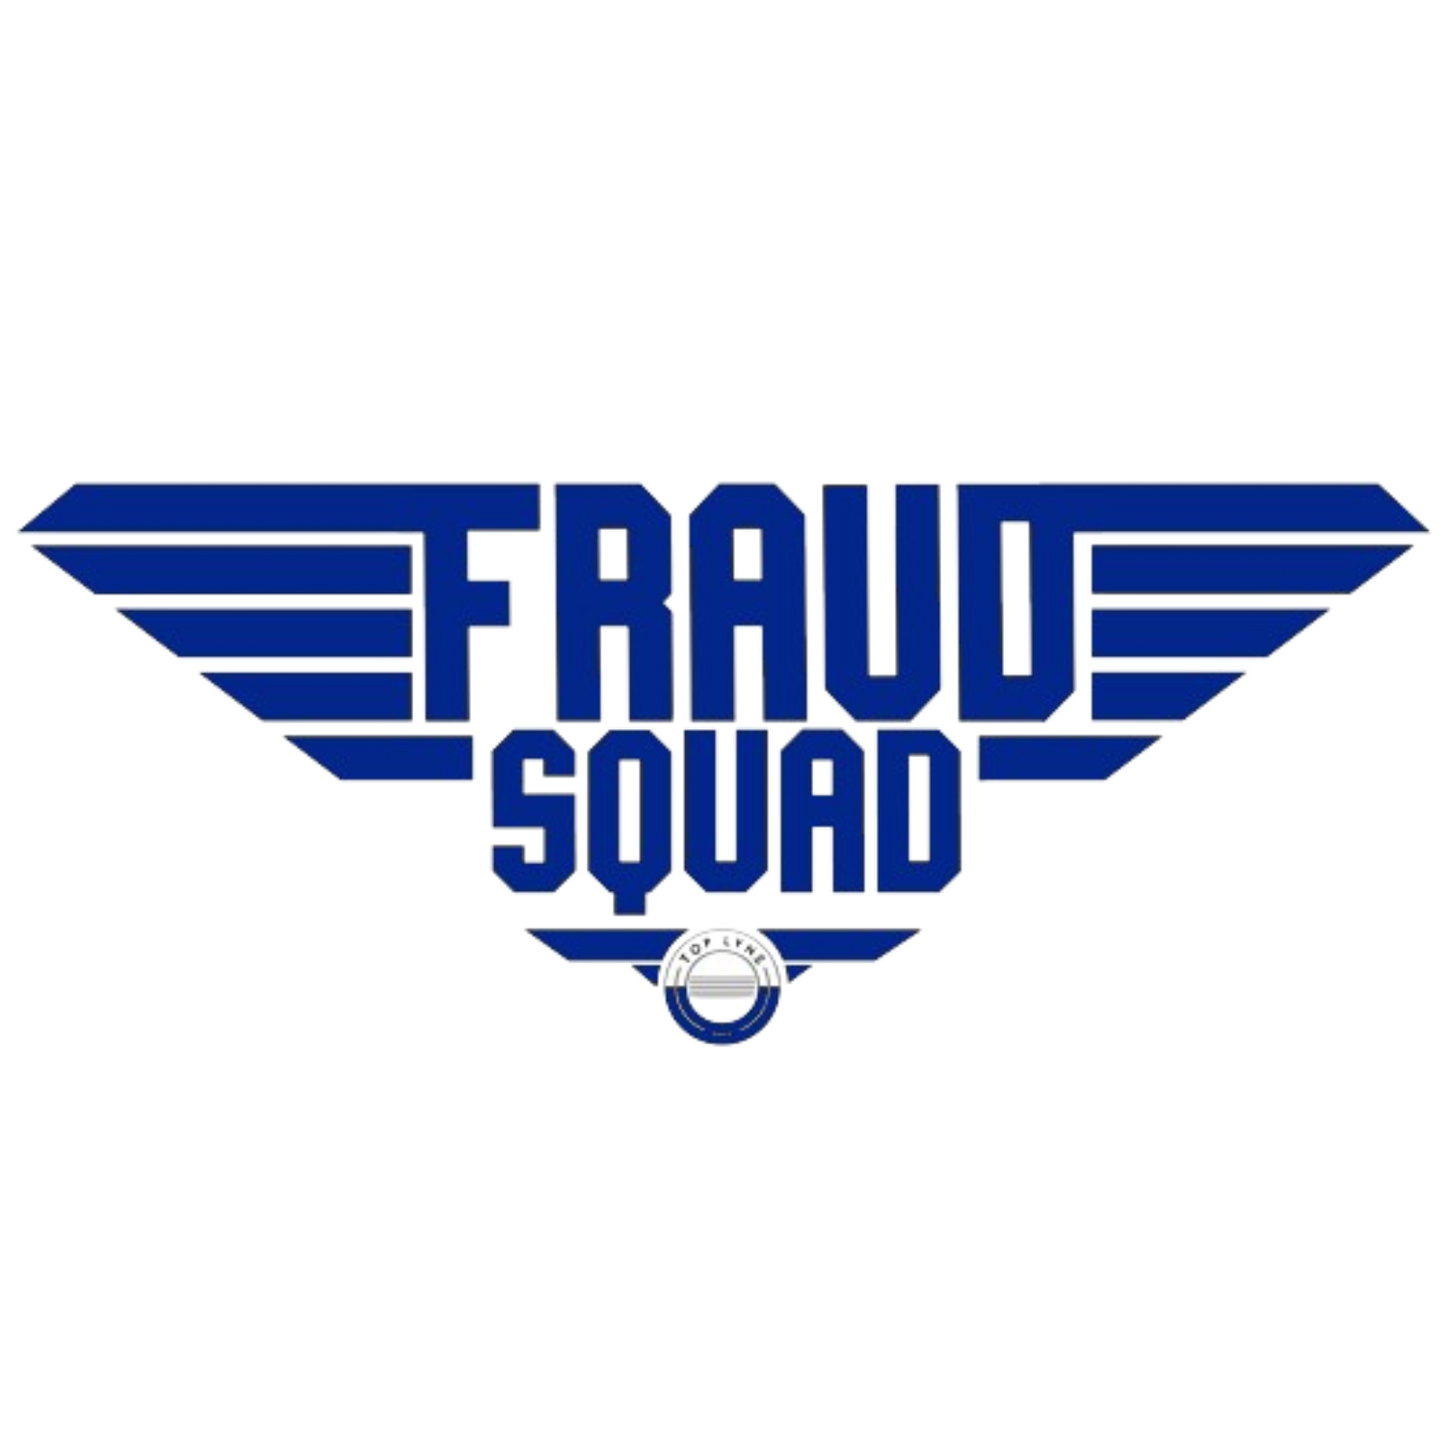 TLM Fraud Squad Crewneck